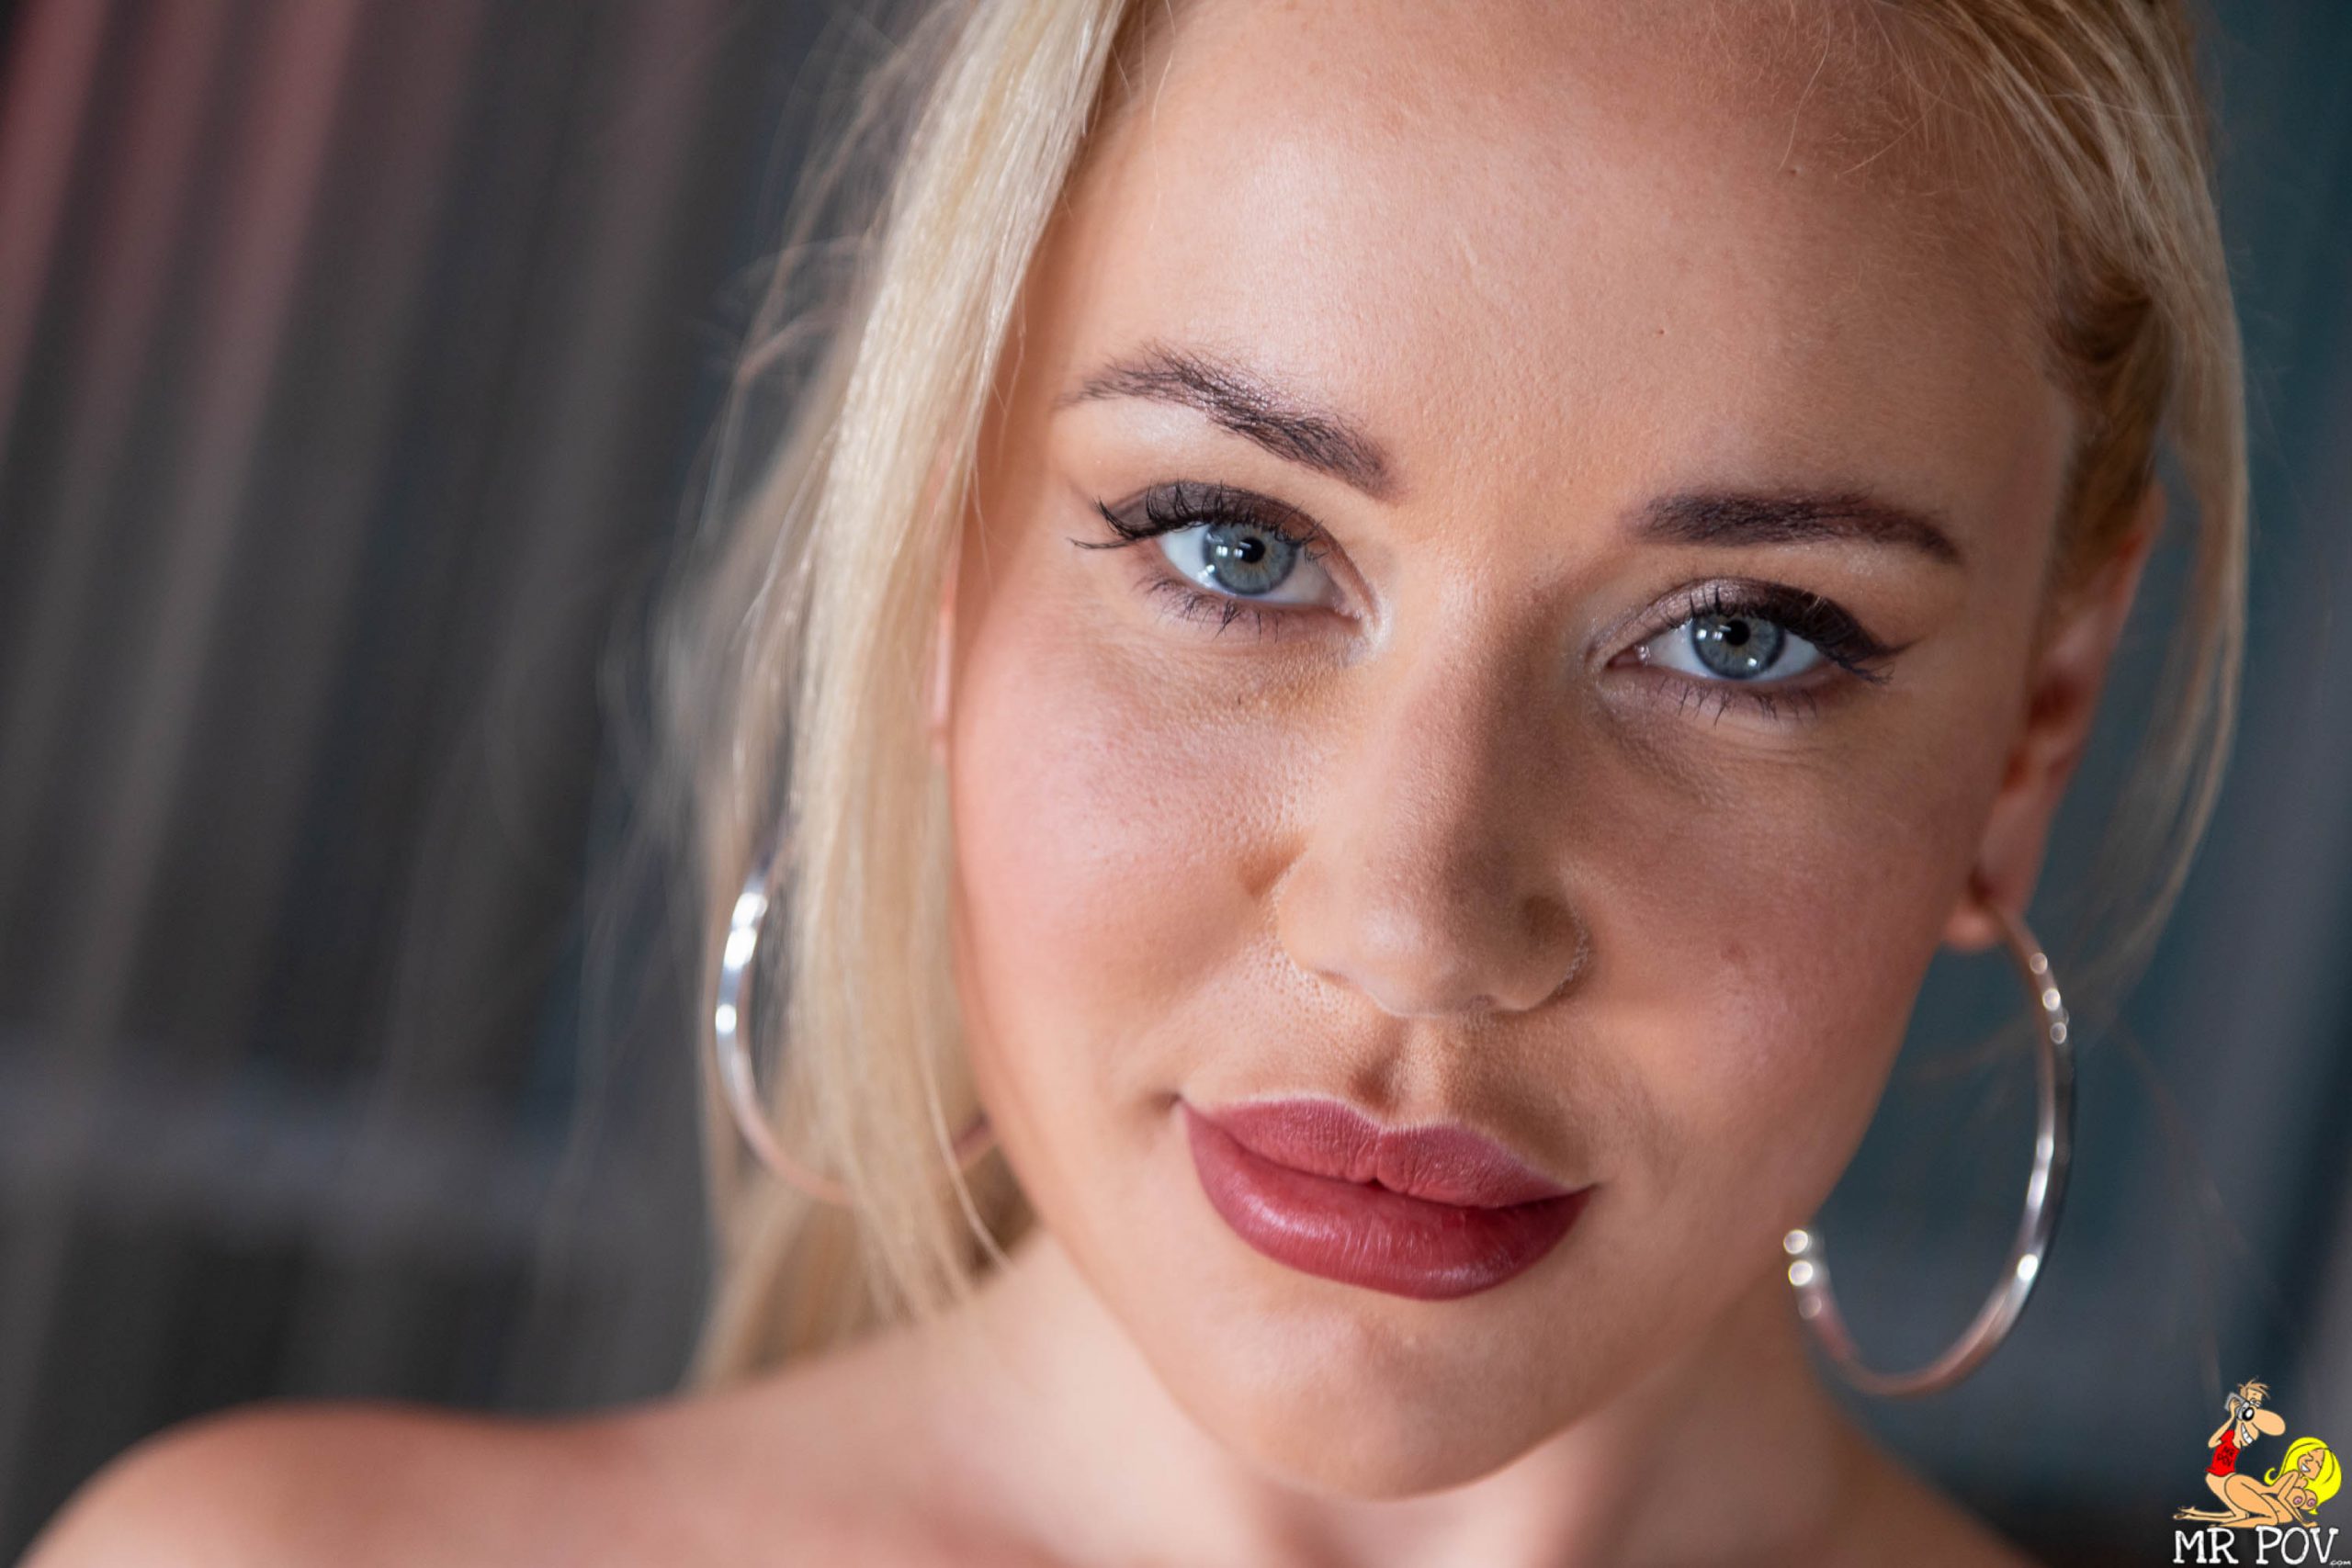 Download Porn Star - Interview with a Porn star: Savannah Bond - I Shoot Porn